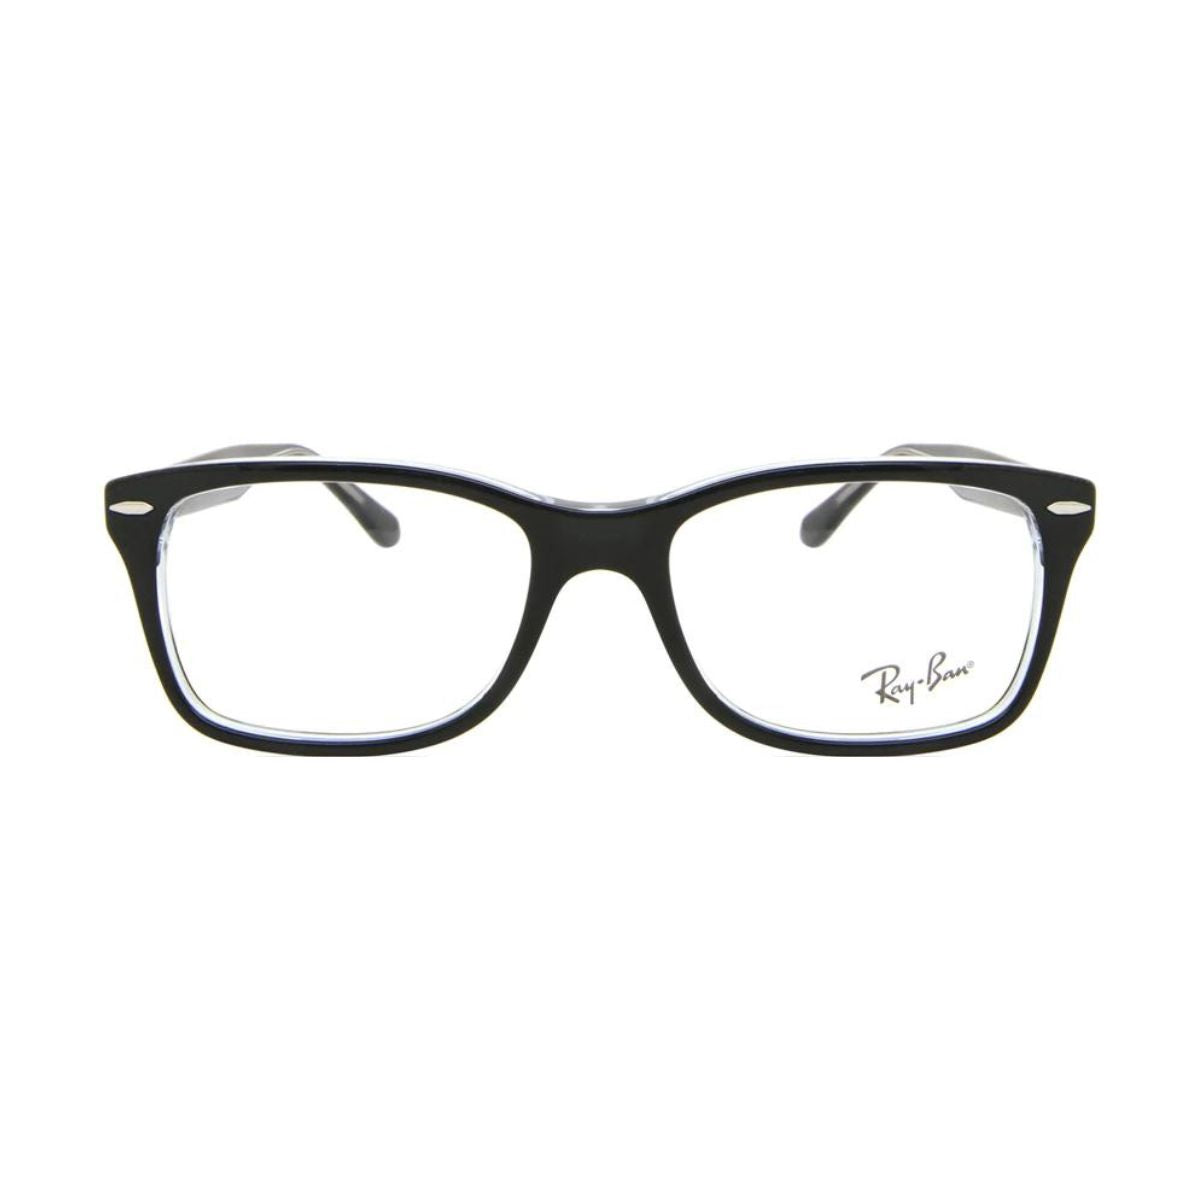 "buy Rayban 5428 2034 square shape power glasses frame for men's online at optorium"